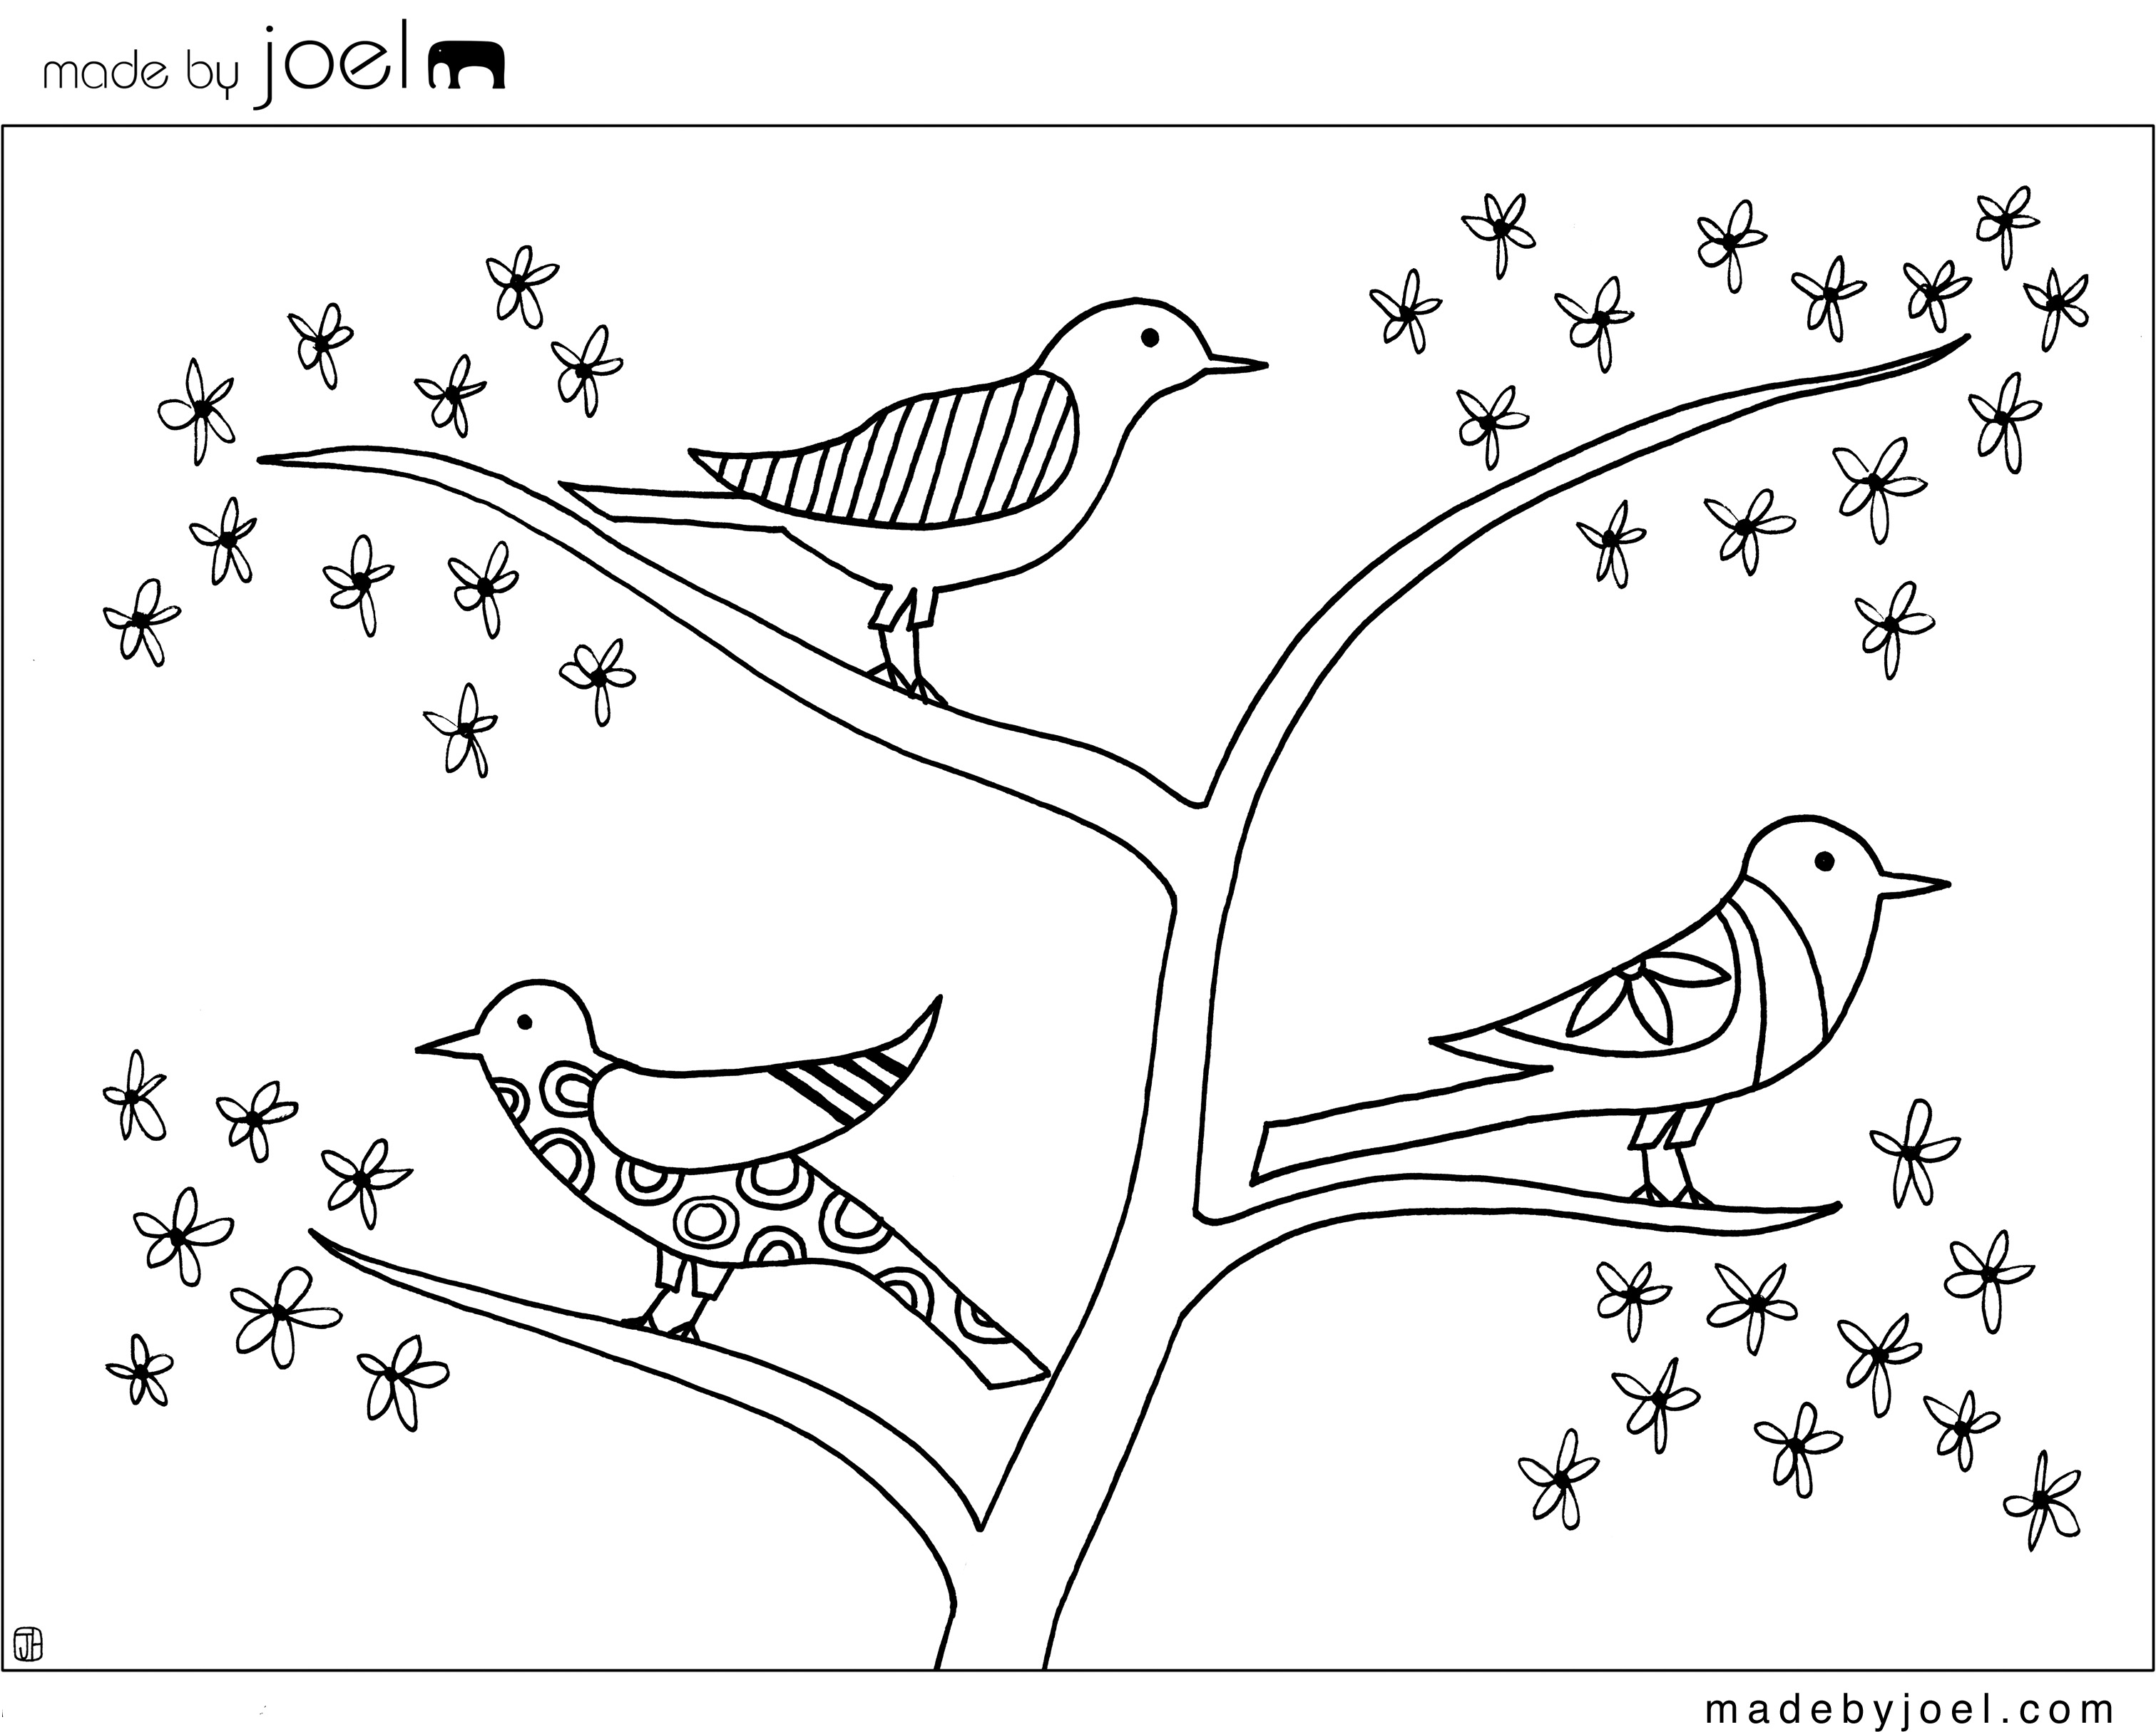 Made-by-Joel-Flower-Tree-Birds-Coloring-Sheet.jpg